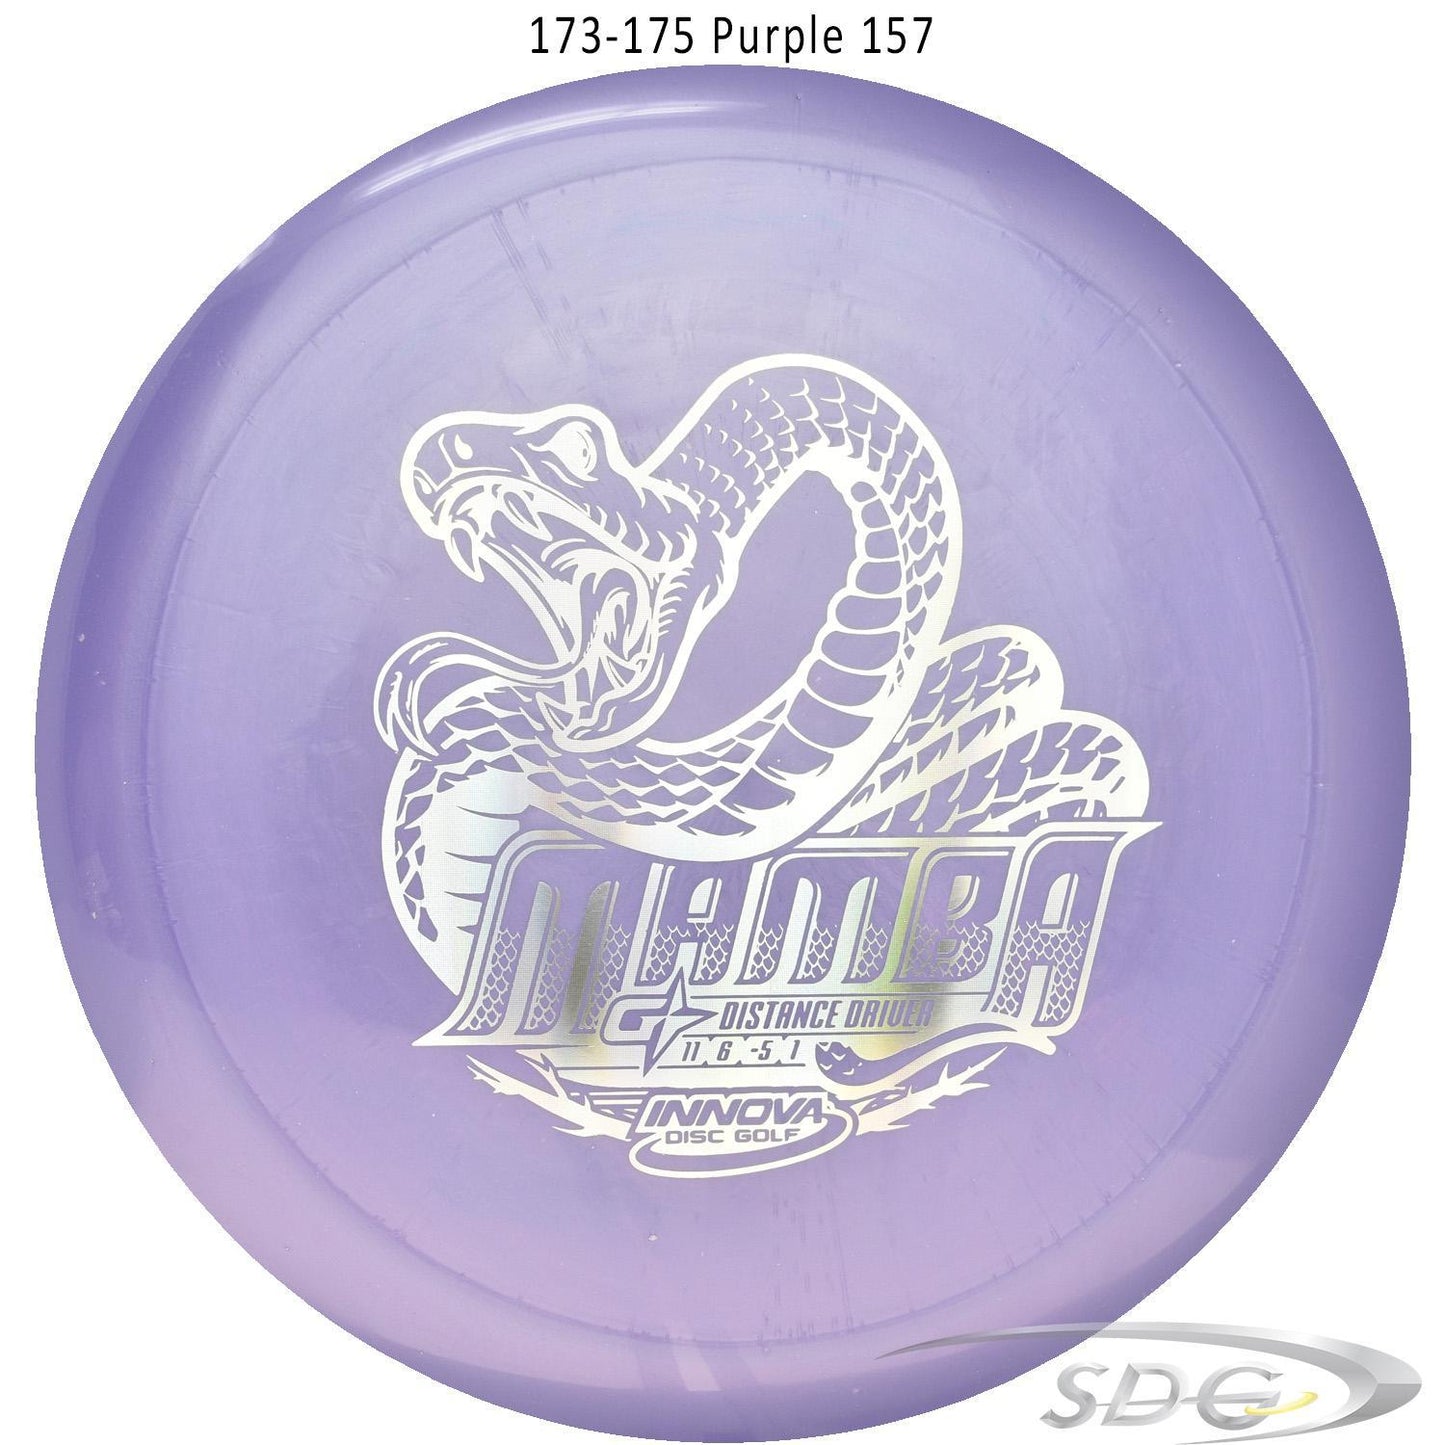 innova-gstar-mamba-disc-golf-distance-driver-175-173-weights 173-175 Purple 157 